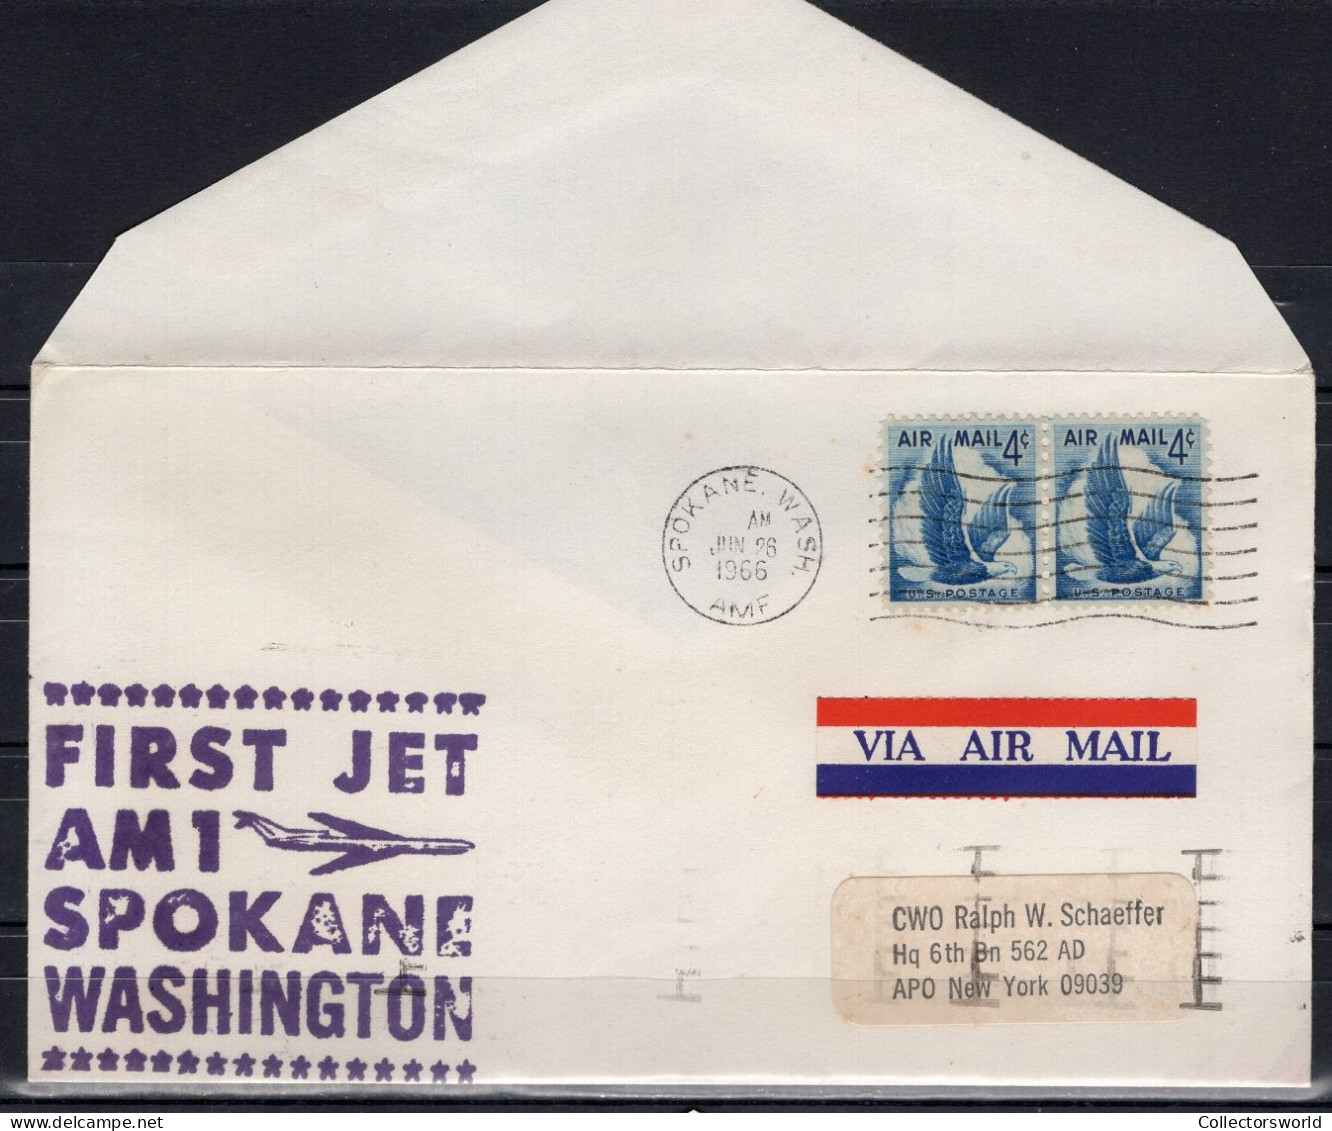 USA 1966 First Flight Cover First Jet AM1 Spokane - Washington Purple Ink - Event Covers